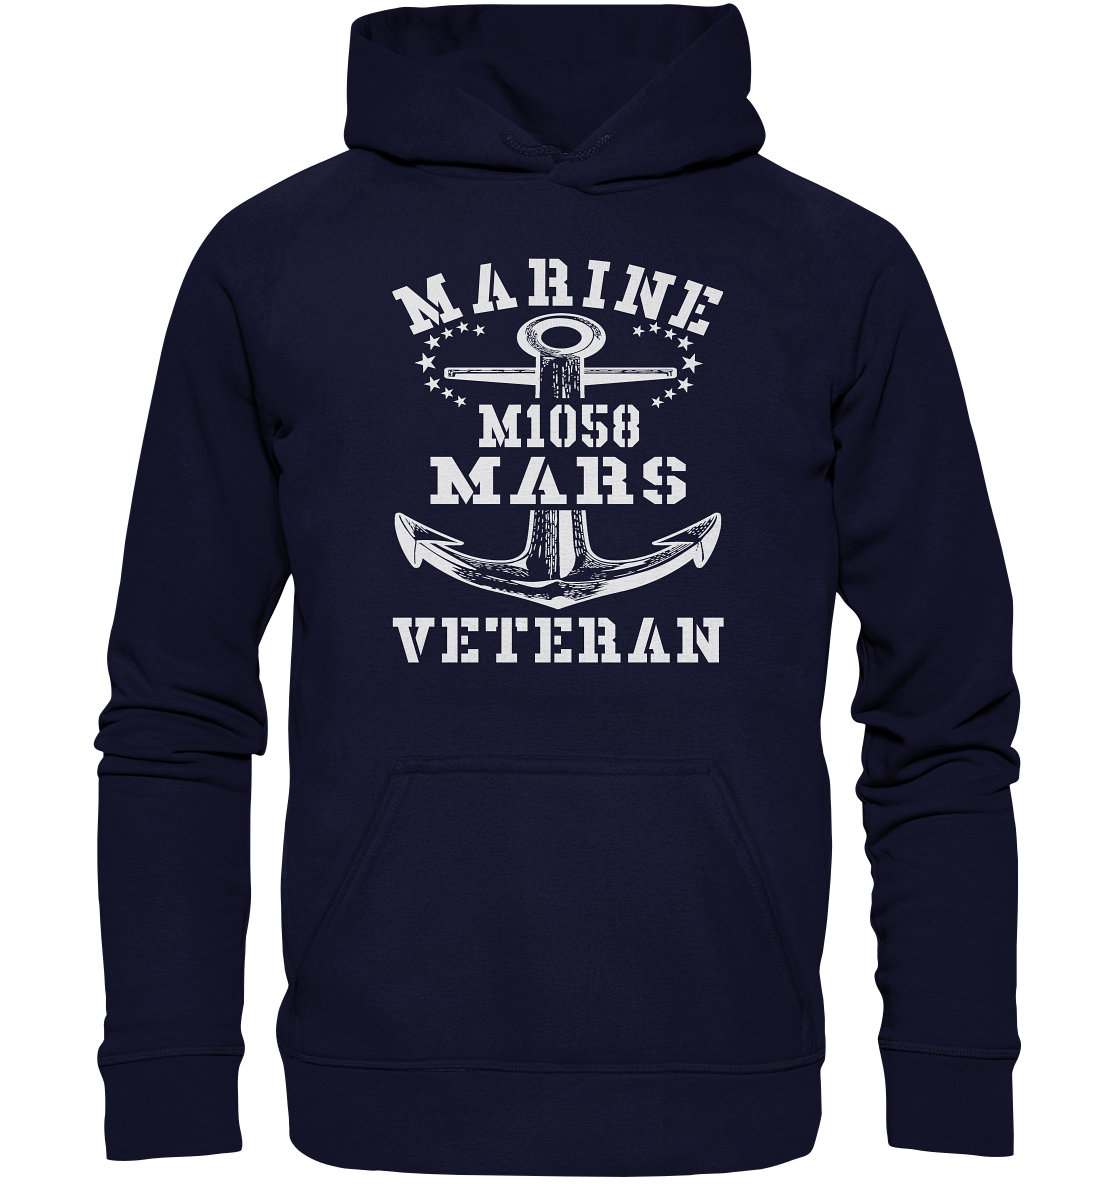 SM-Boot M1058 MARS Marine Veteran - Basic Unisex Hoodie XL